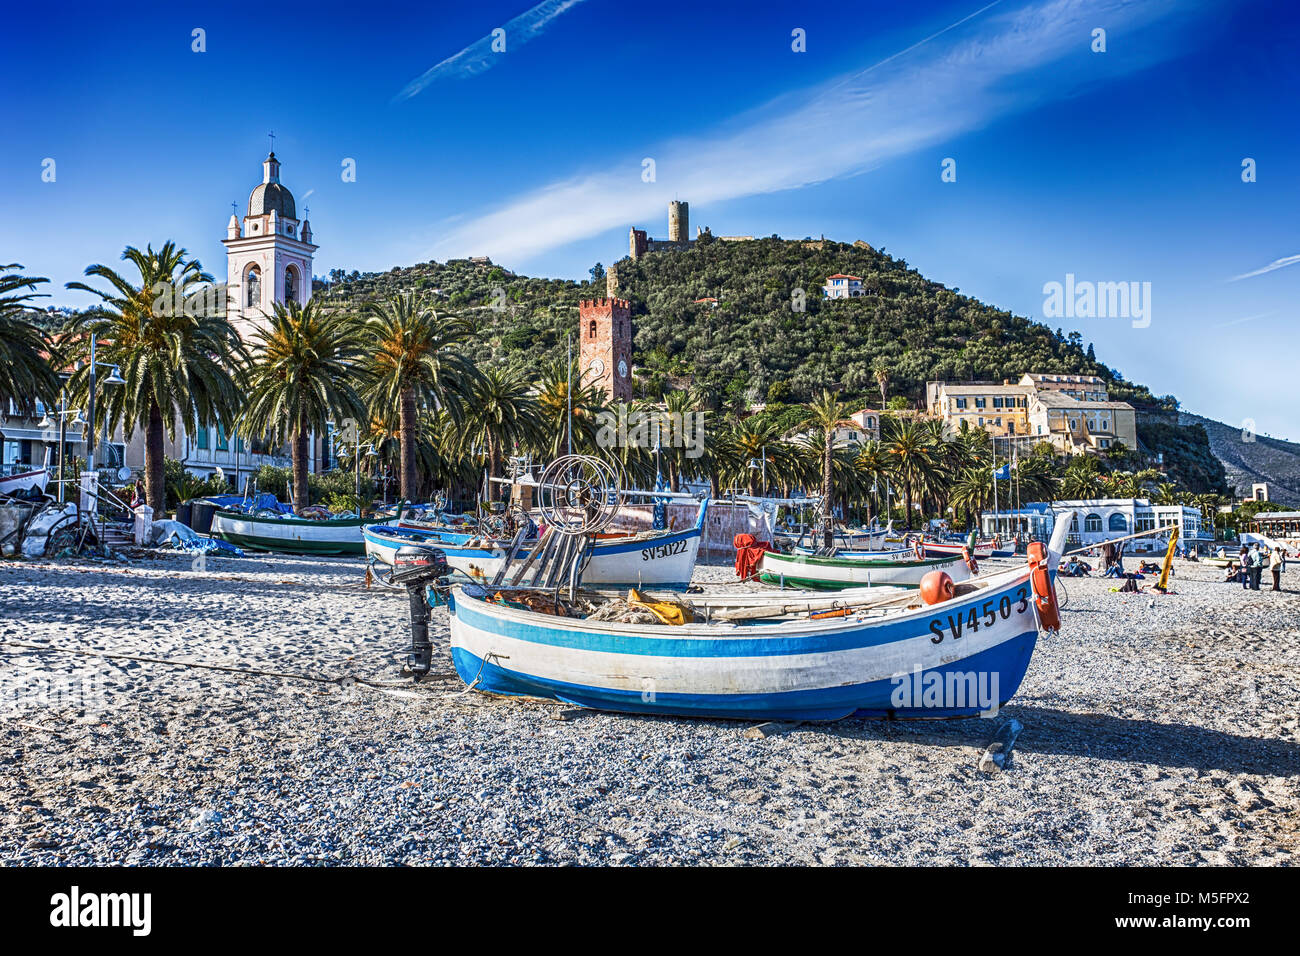 NOLI, Savona, Italia - Aprile 4, 2015 - La barca sulla spiaggia, Noli; Savona, Italia Foto Stock